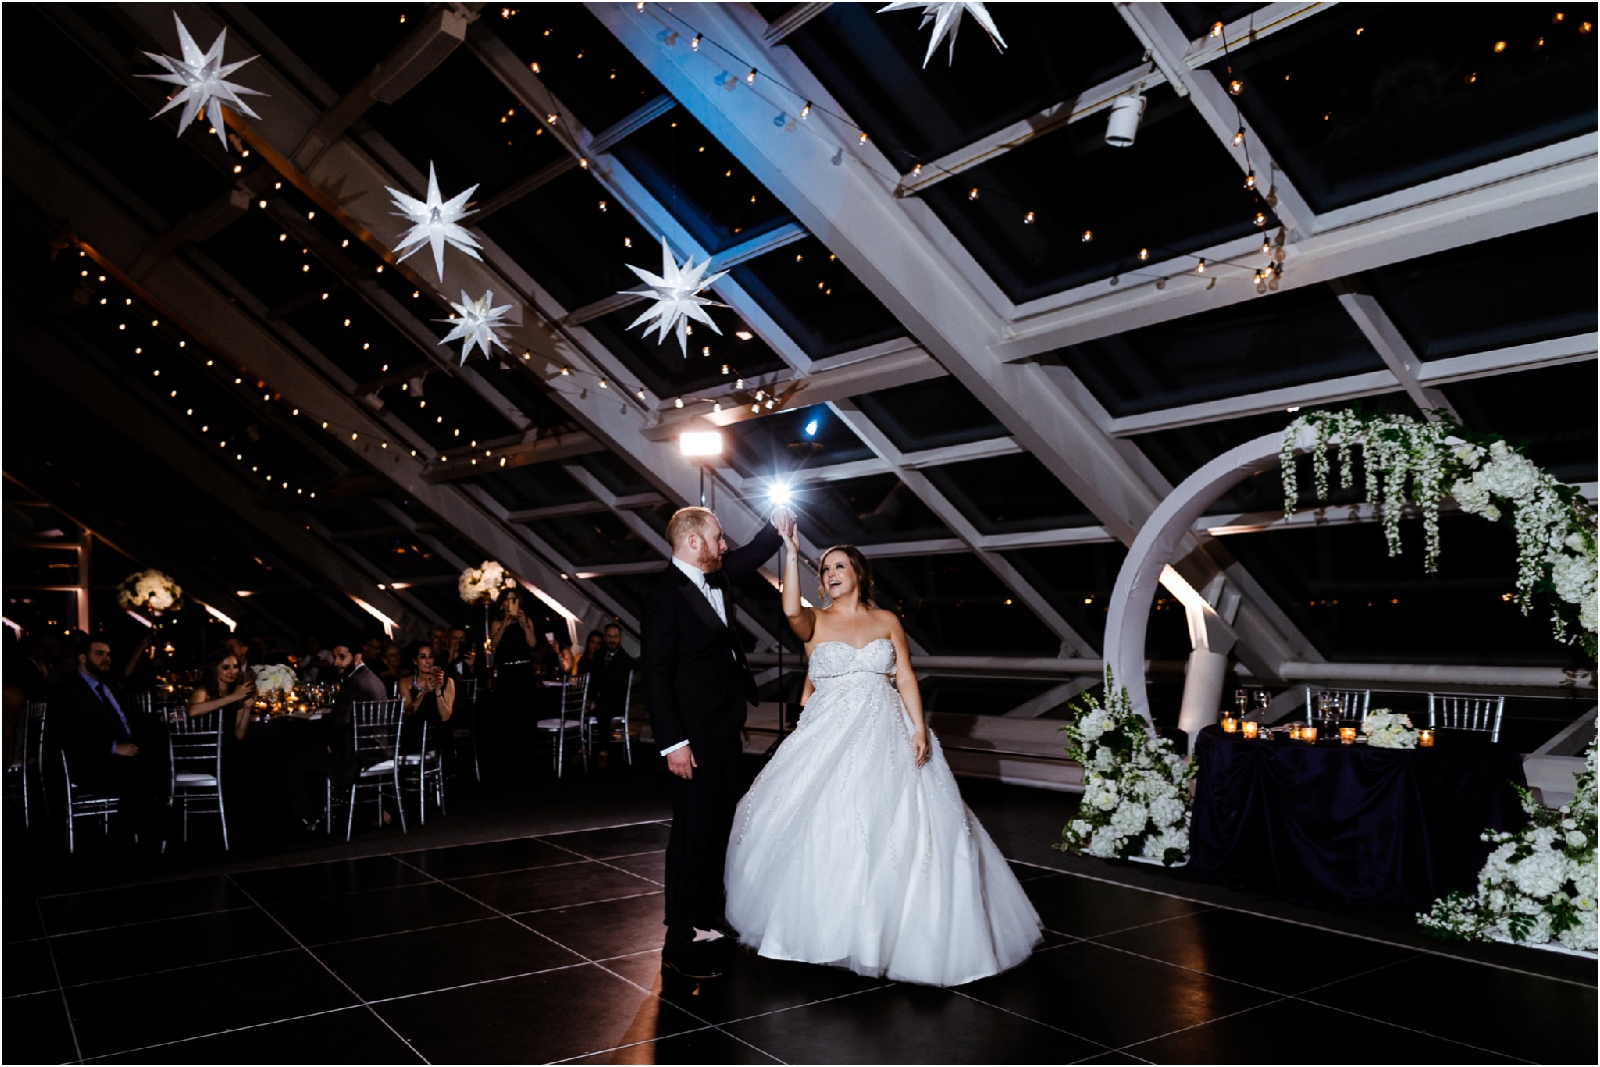 Adler Planetarium Wedding Reception | Chicago Wedding Photographer 